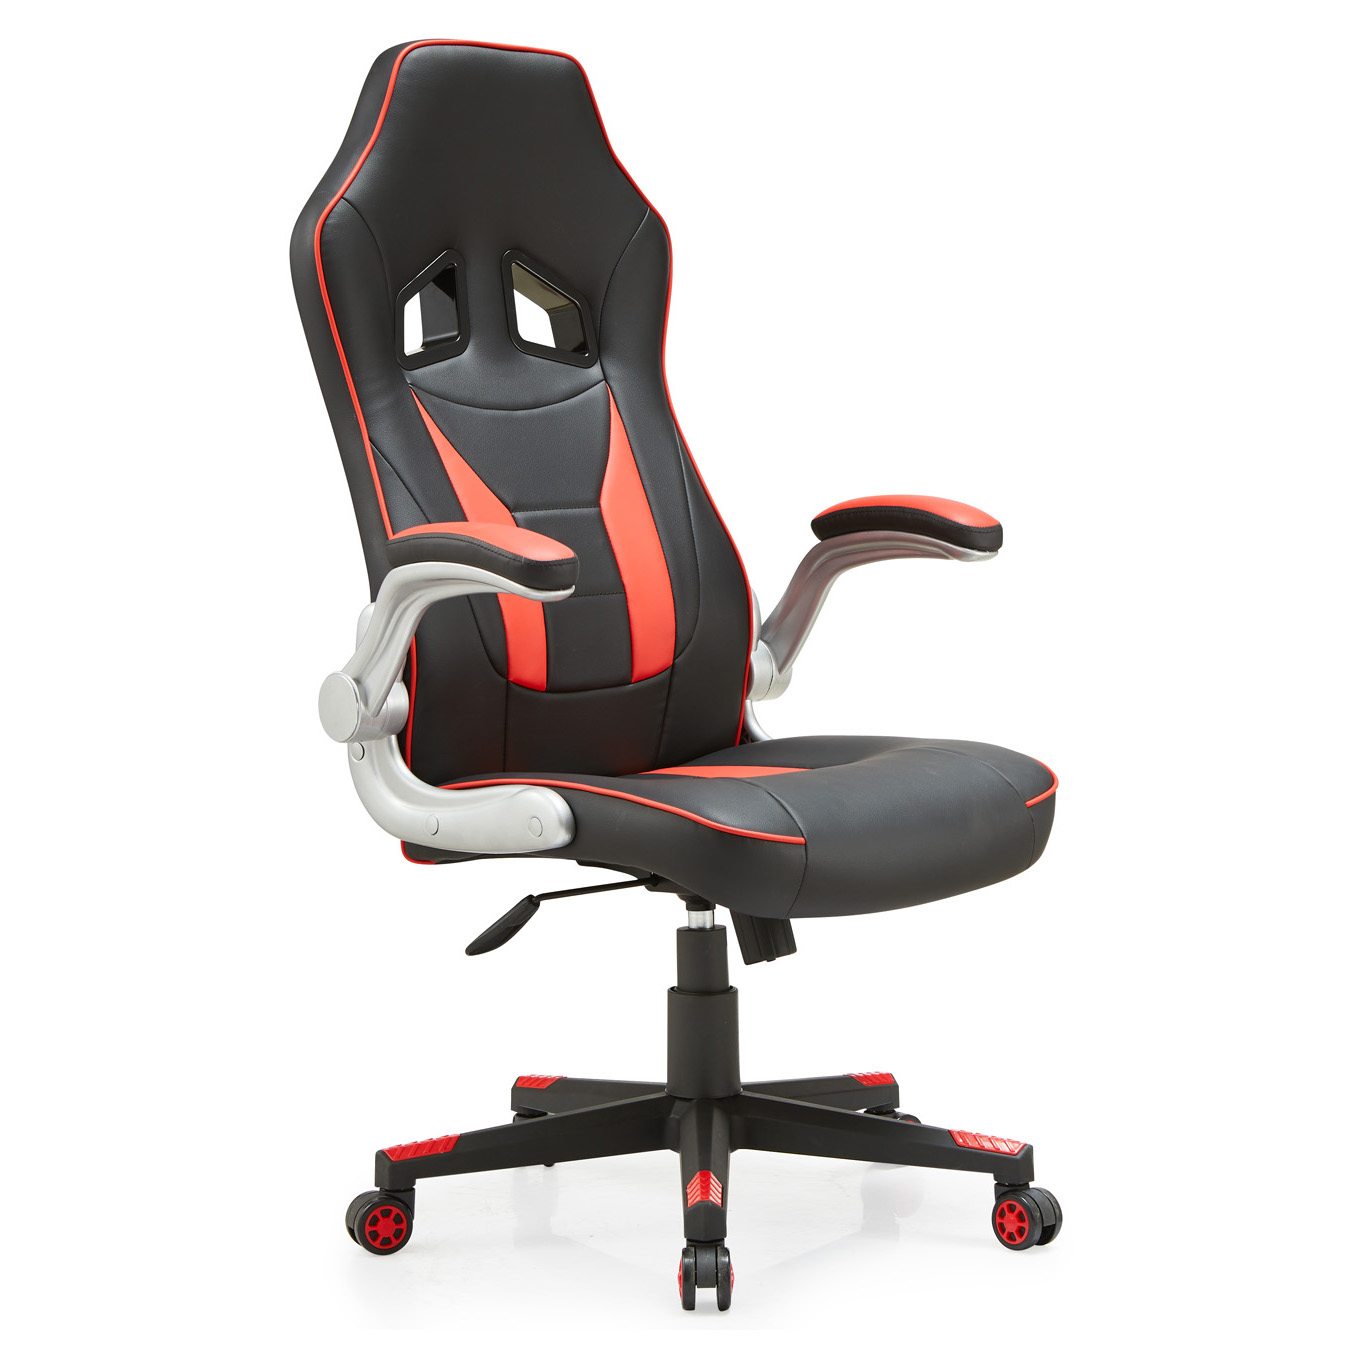 Moderner Junior-Racing-Gaming-Stuhl aus Leder, günstiger Preis